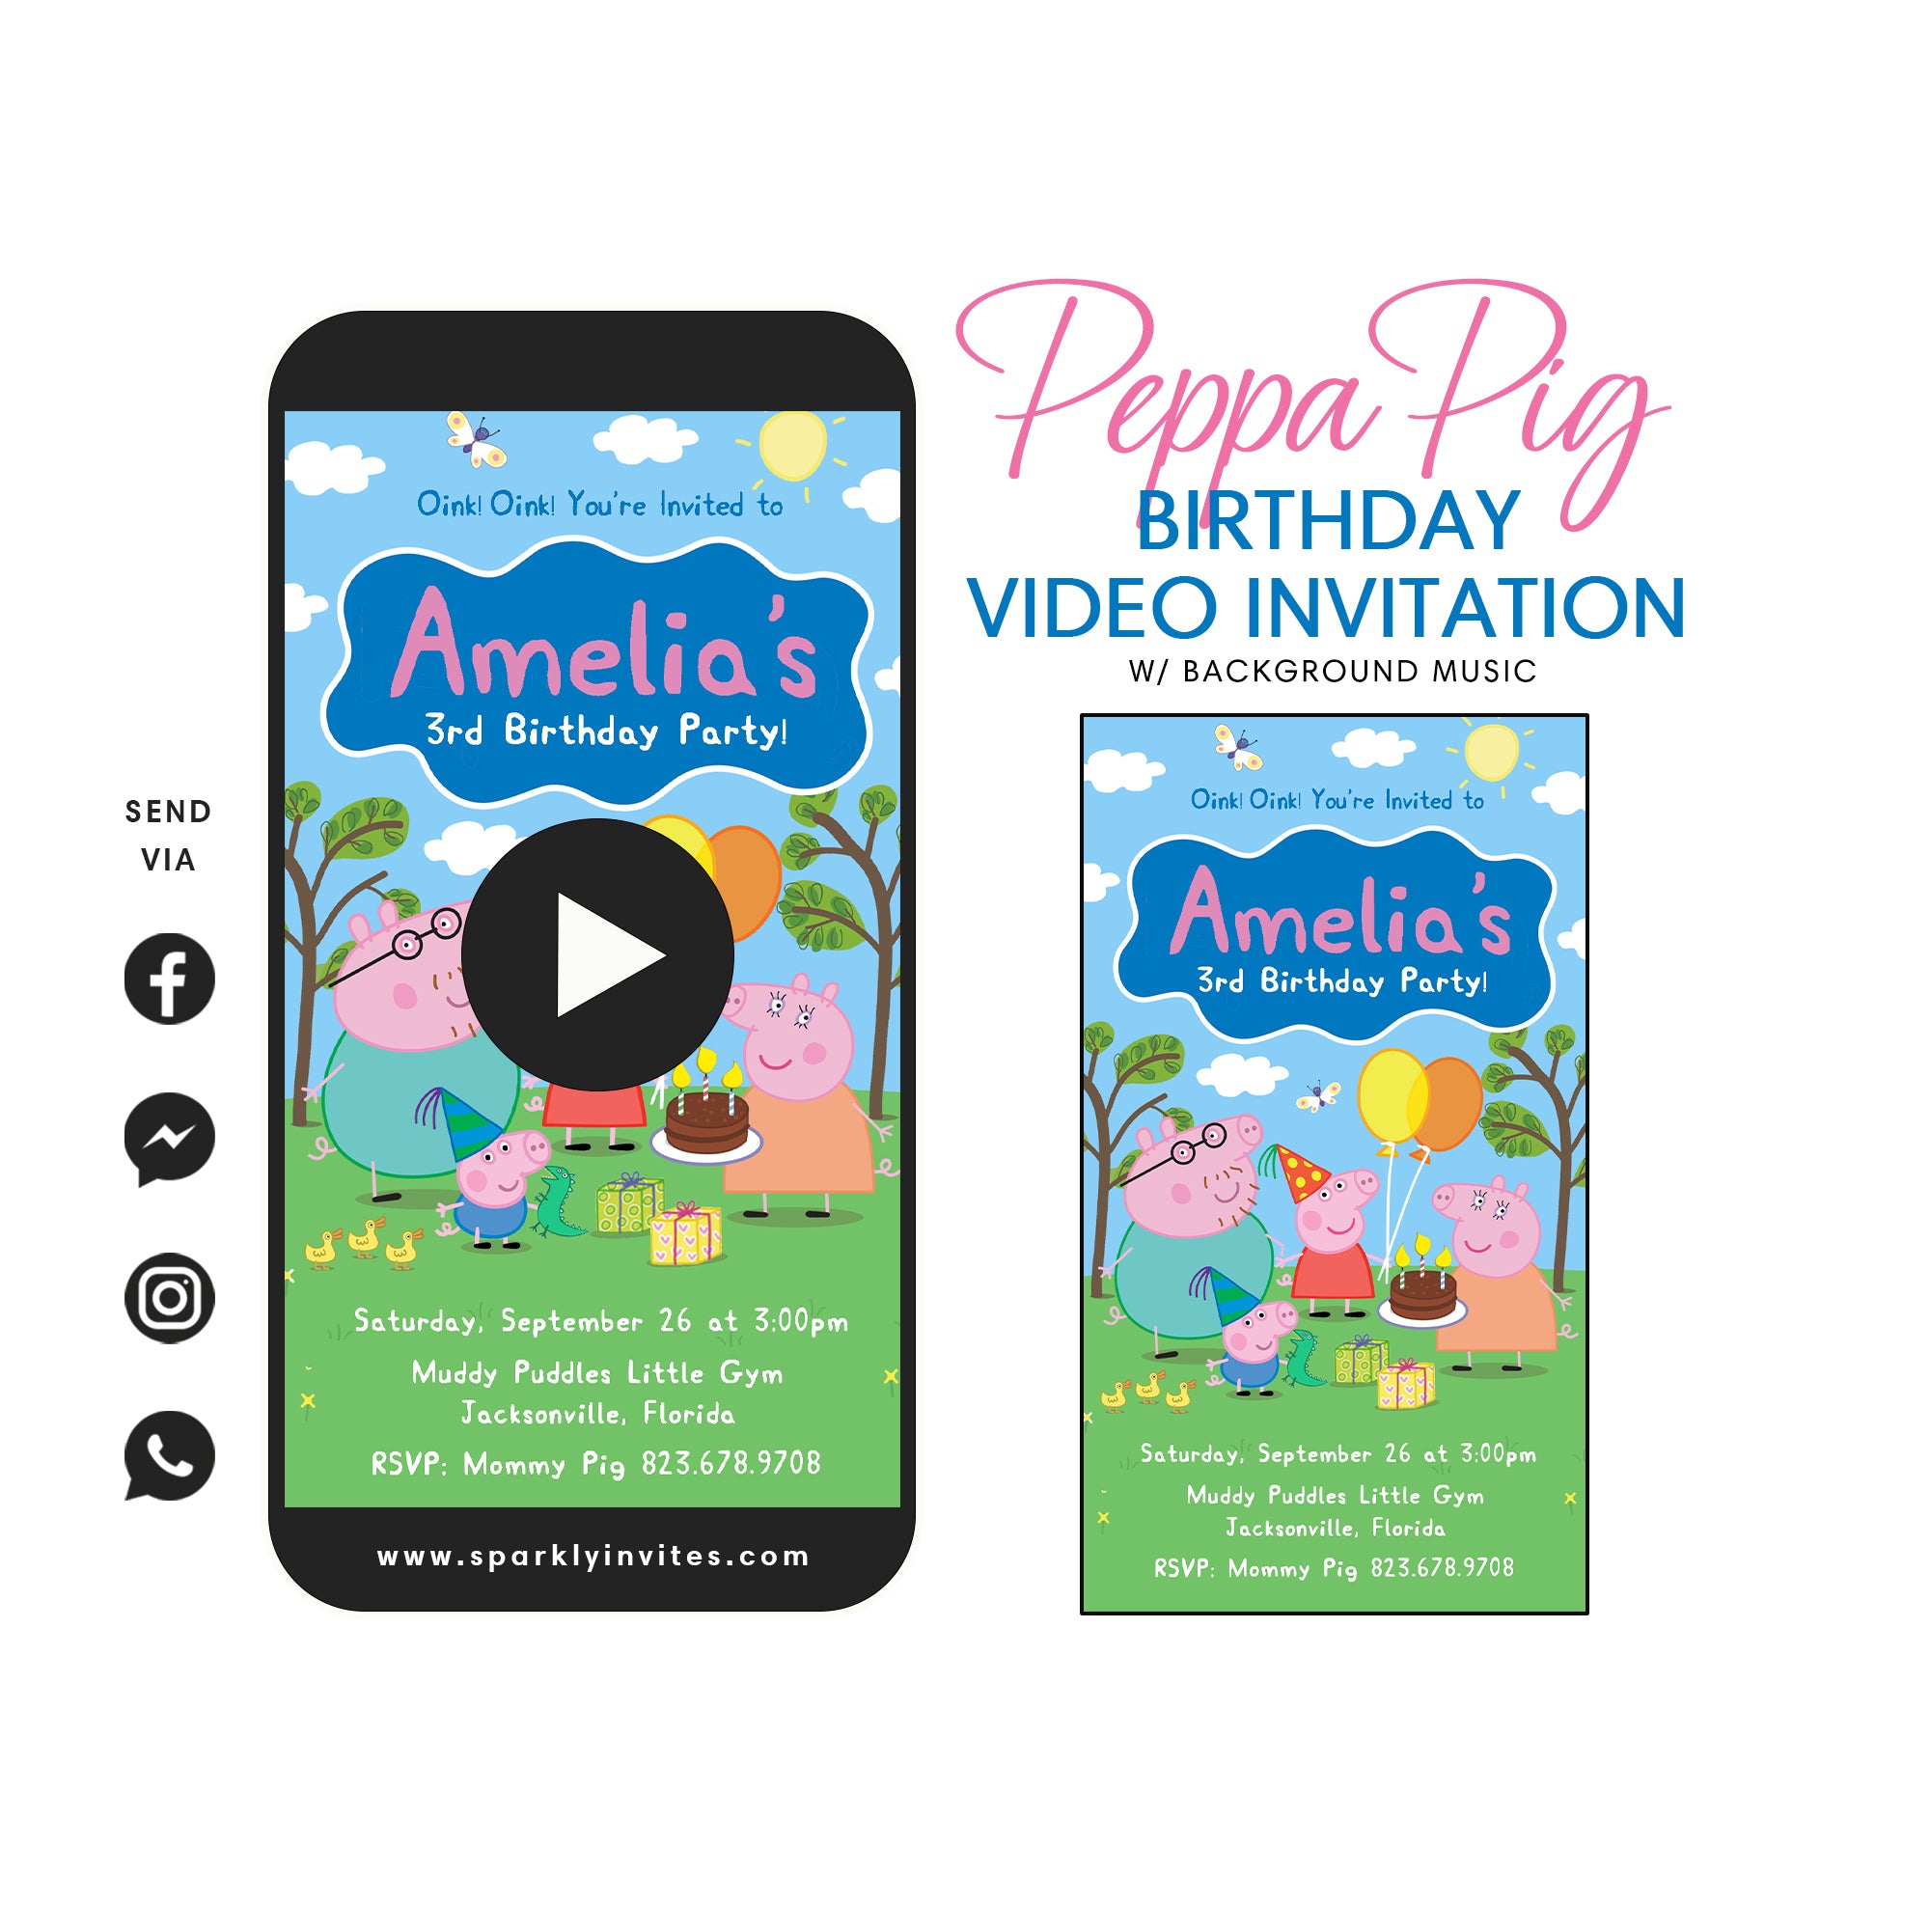 Peppa Pig Birthday Video Invitation 